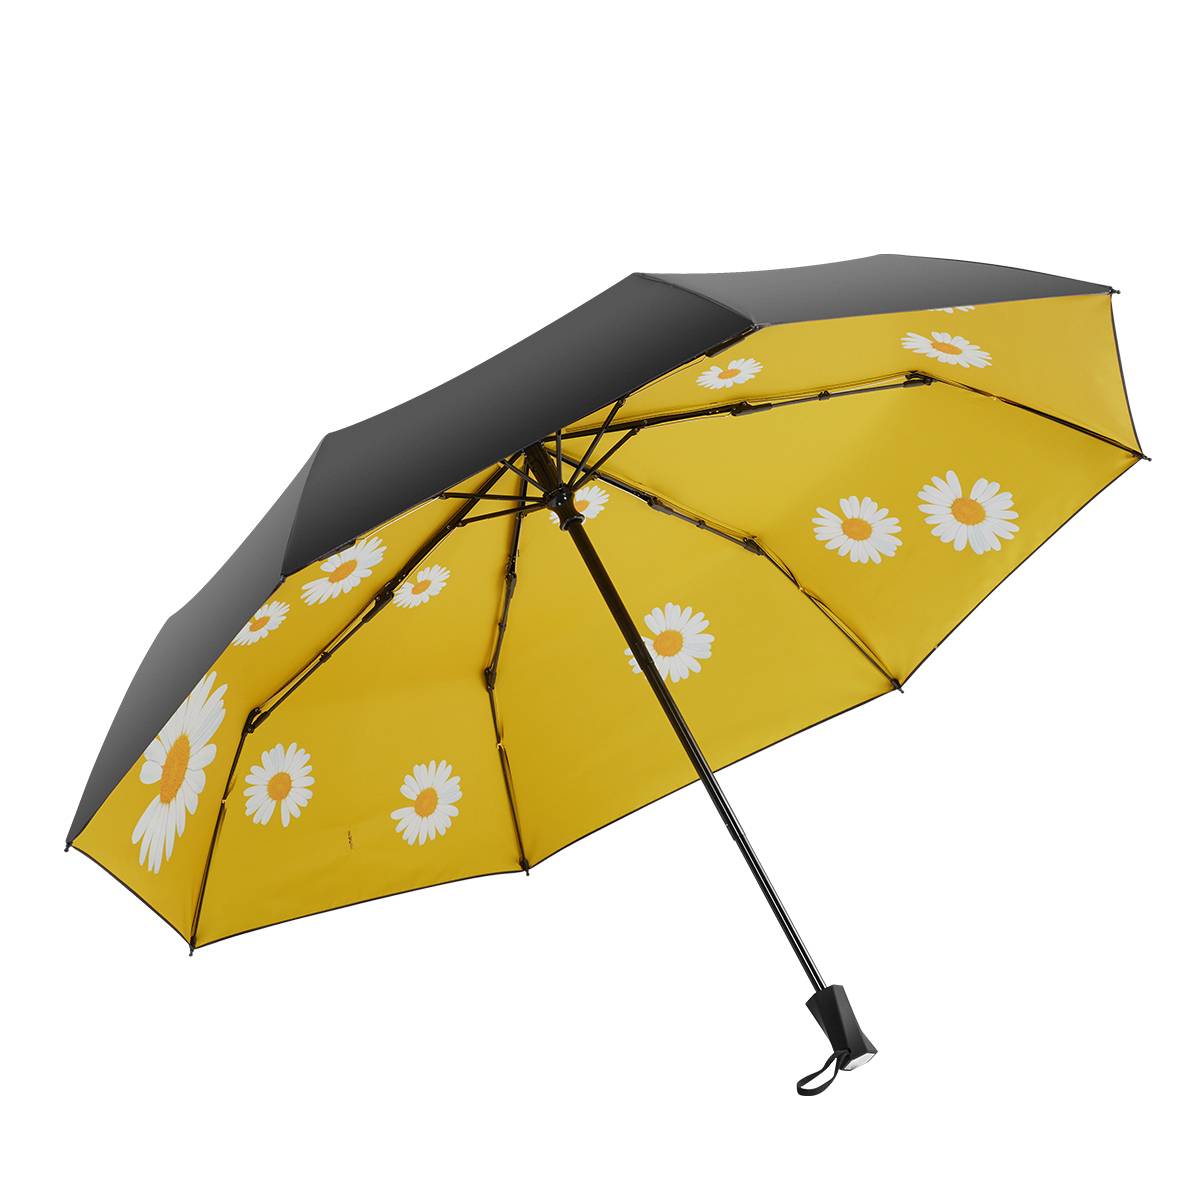 100% Original Automatic Foldable Umbrella - 21 inch 8 ribs manual open unique handle design with daisy flower 3 fold umbrella – DongFangZhanXin